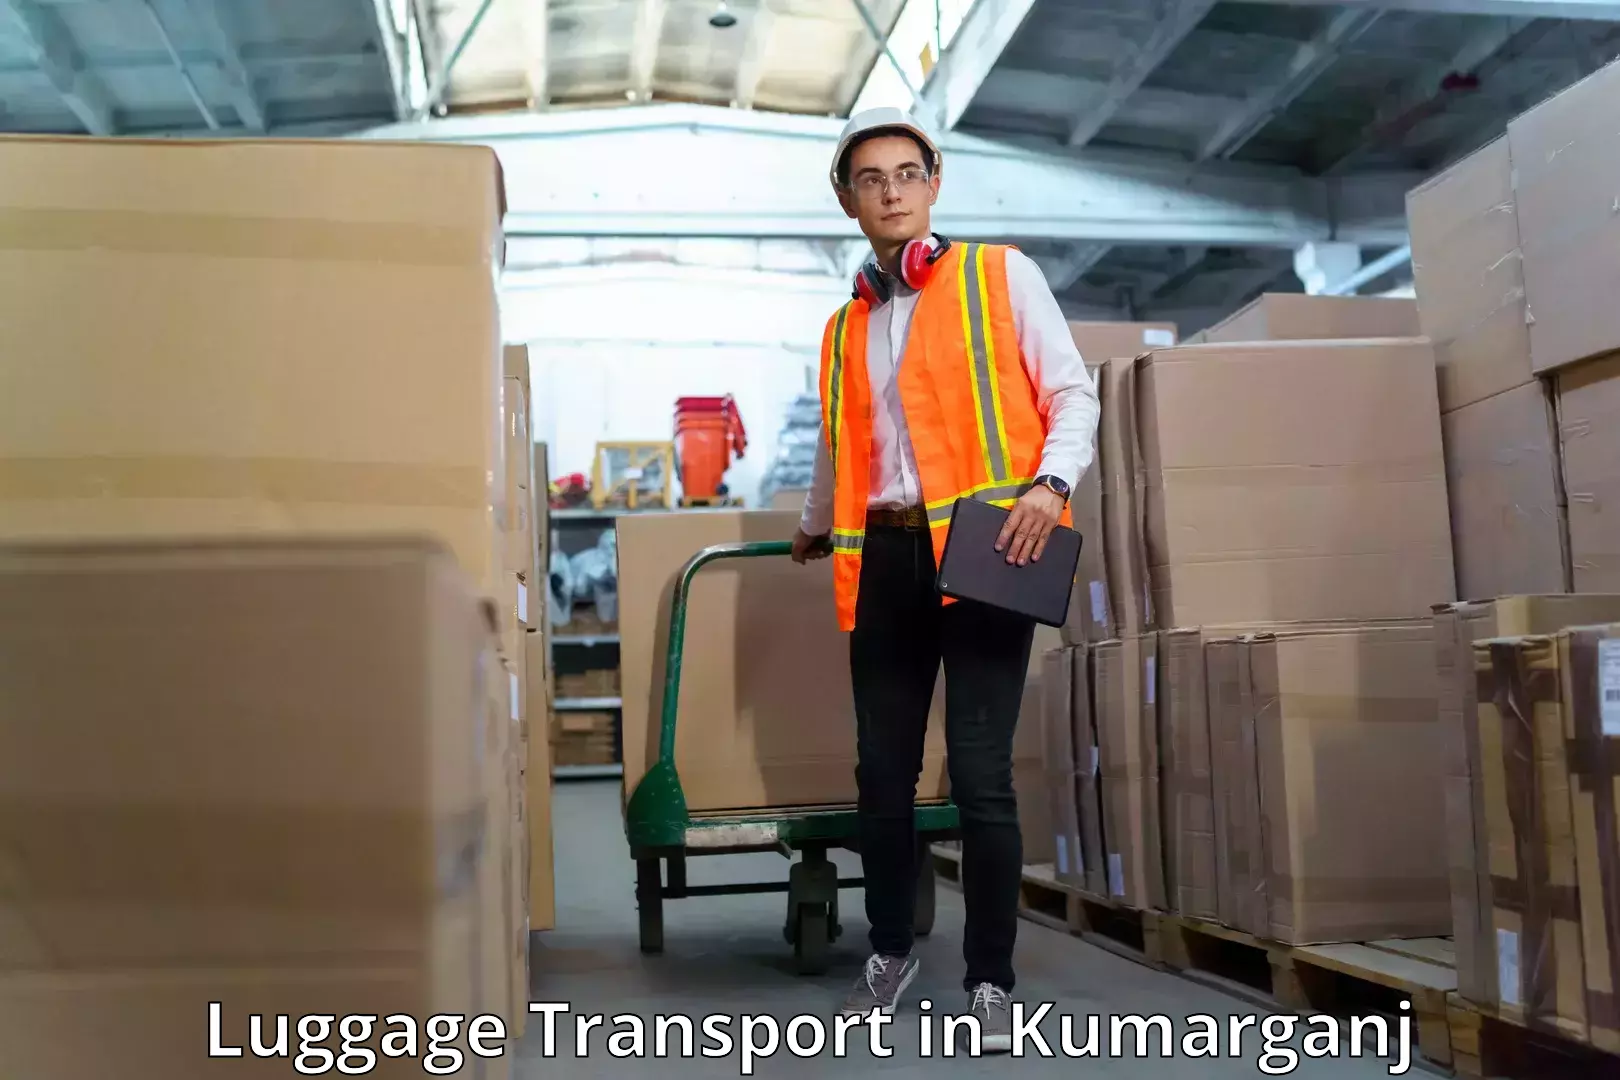 Luggage shipment tracking in Kumarganj